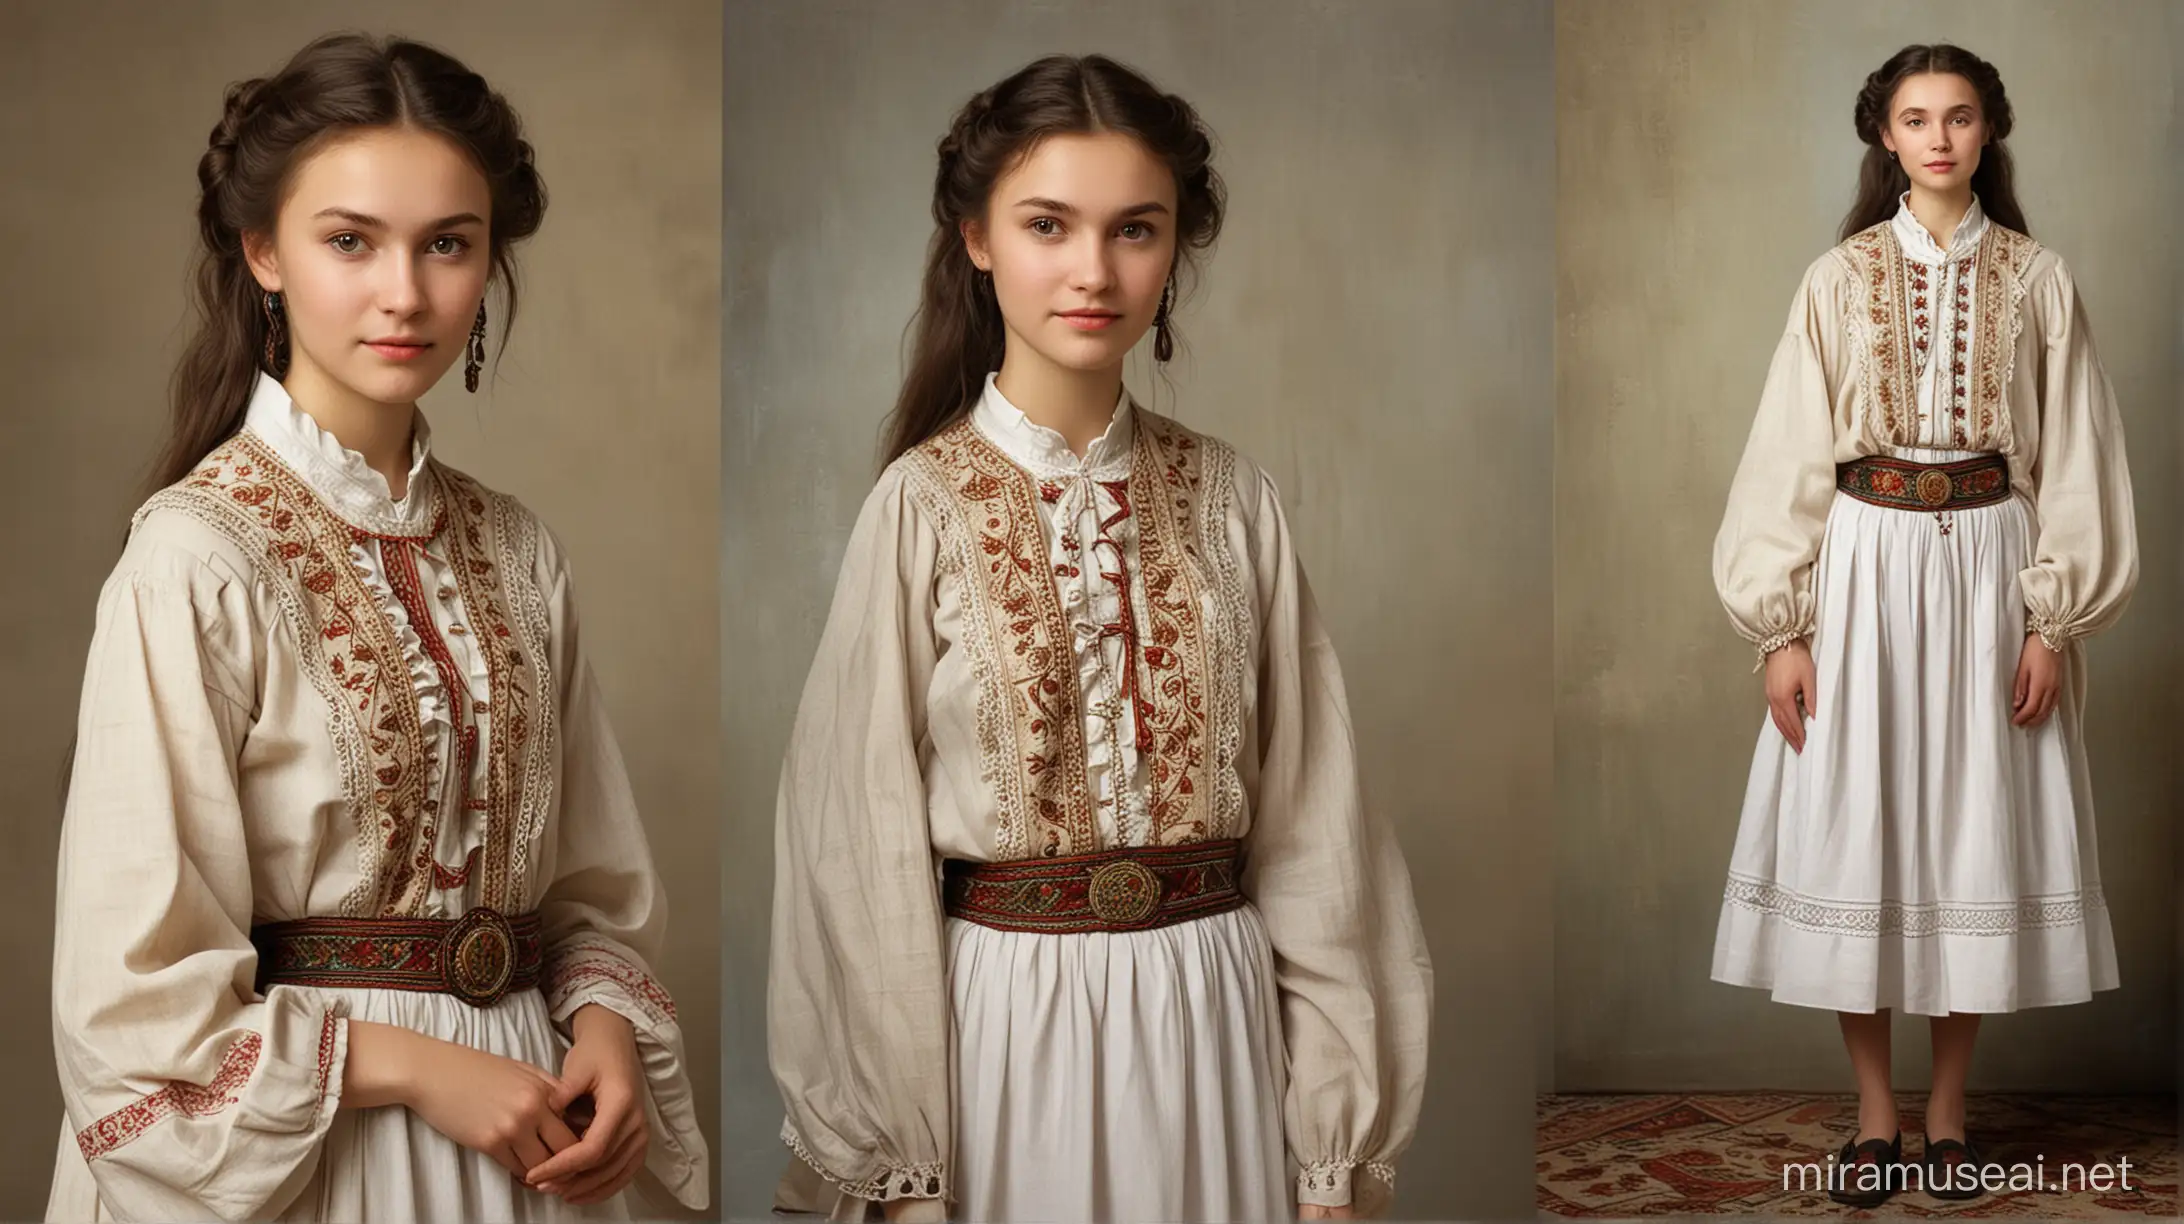 Teenage Girl in Traditional Ukrainian Attire Portrait of Catherine